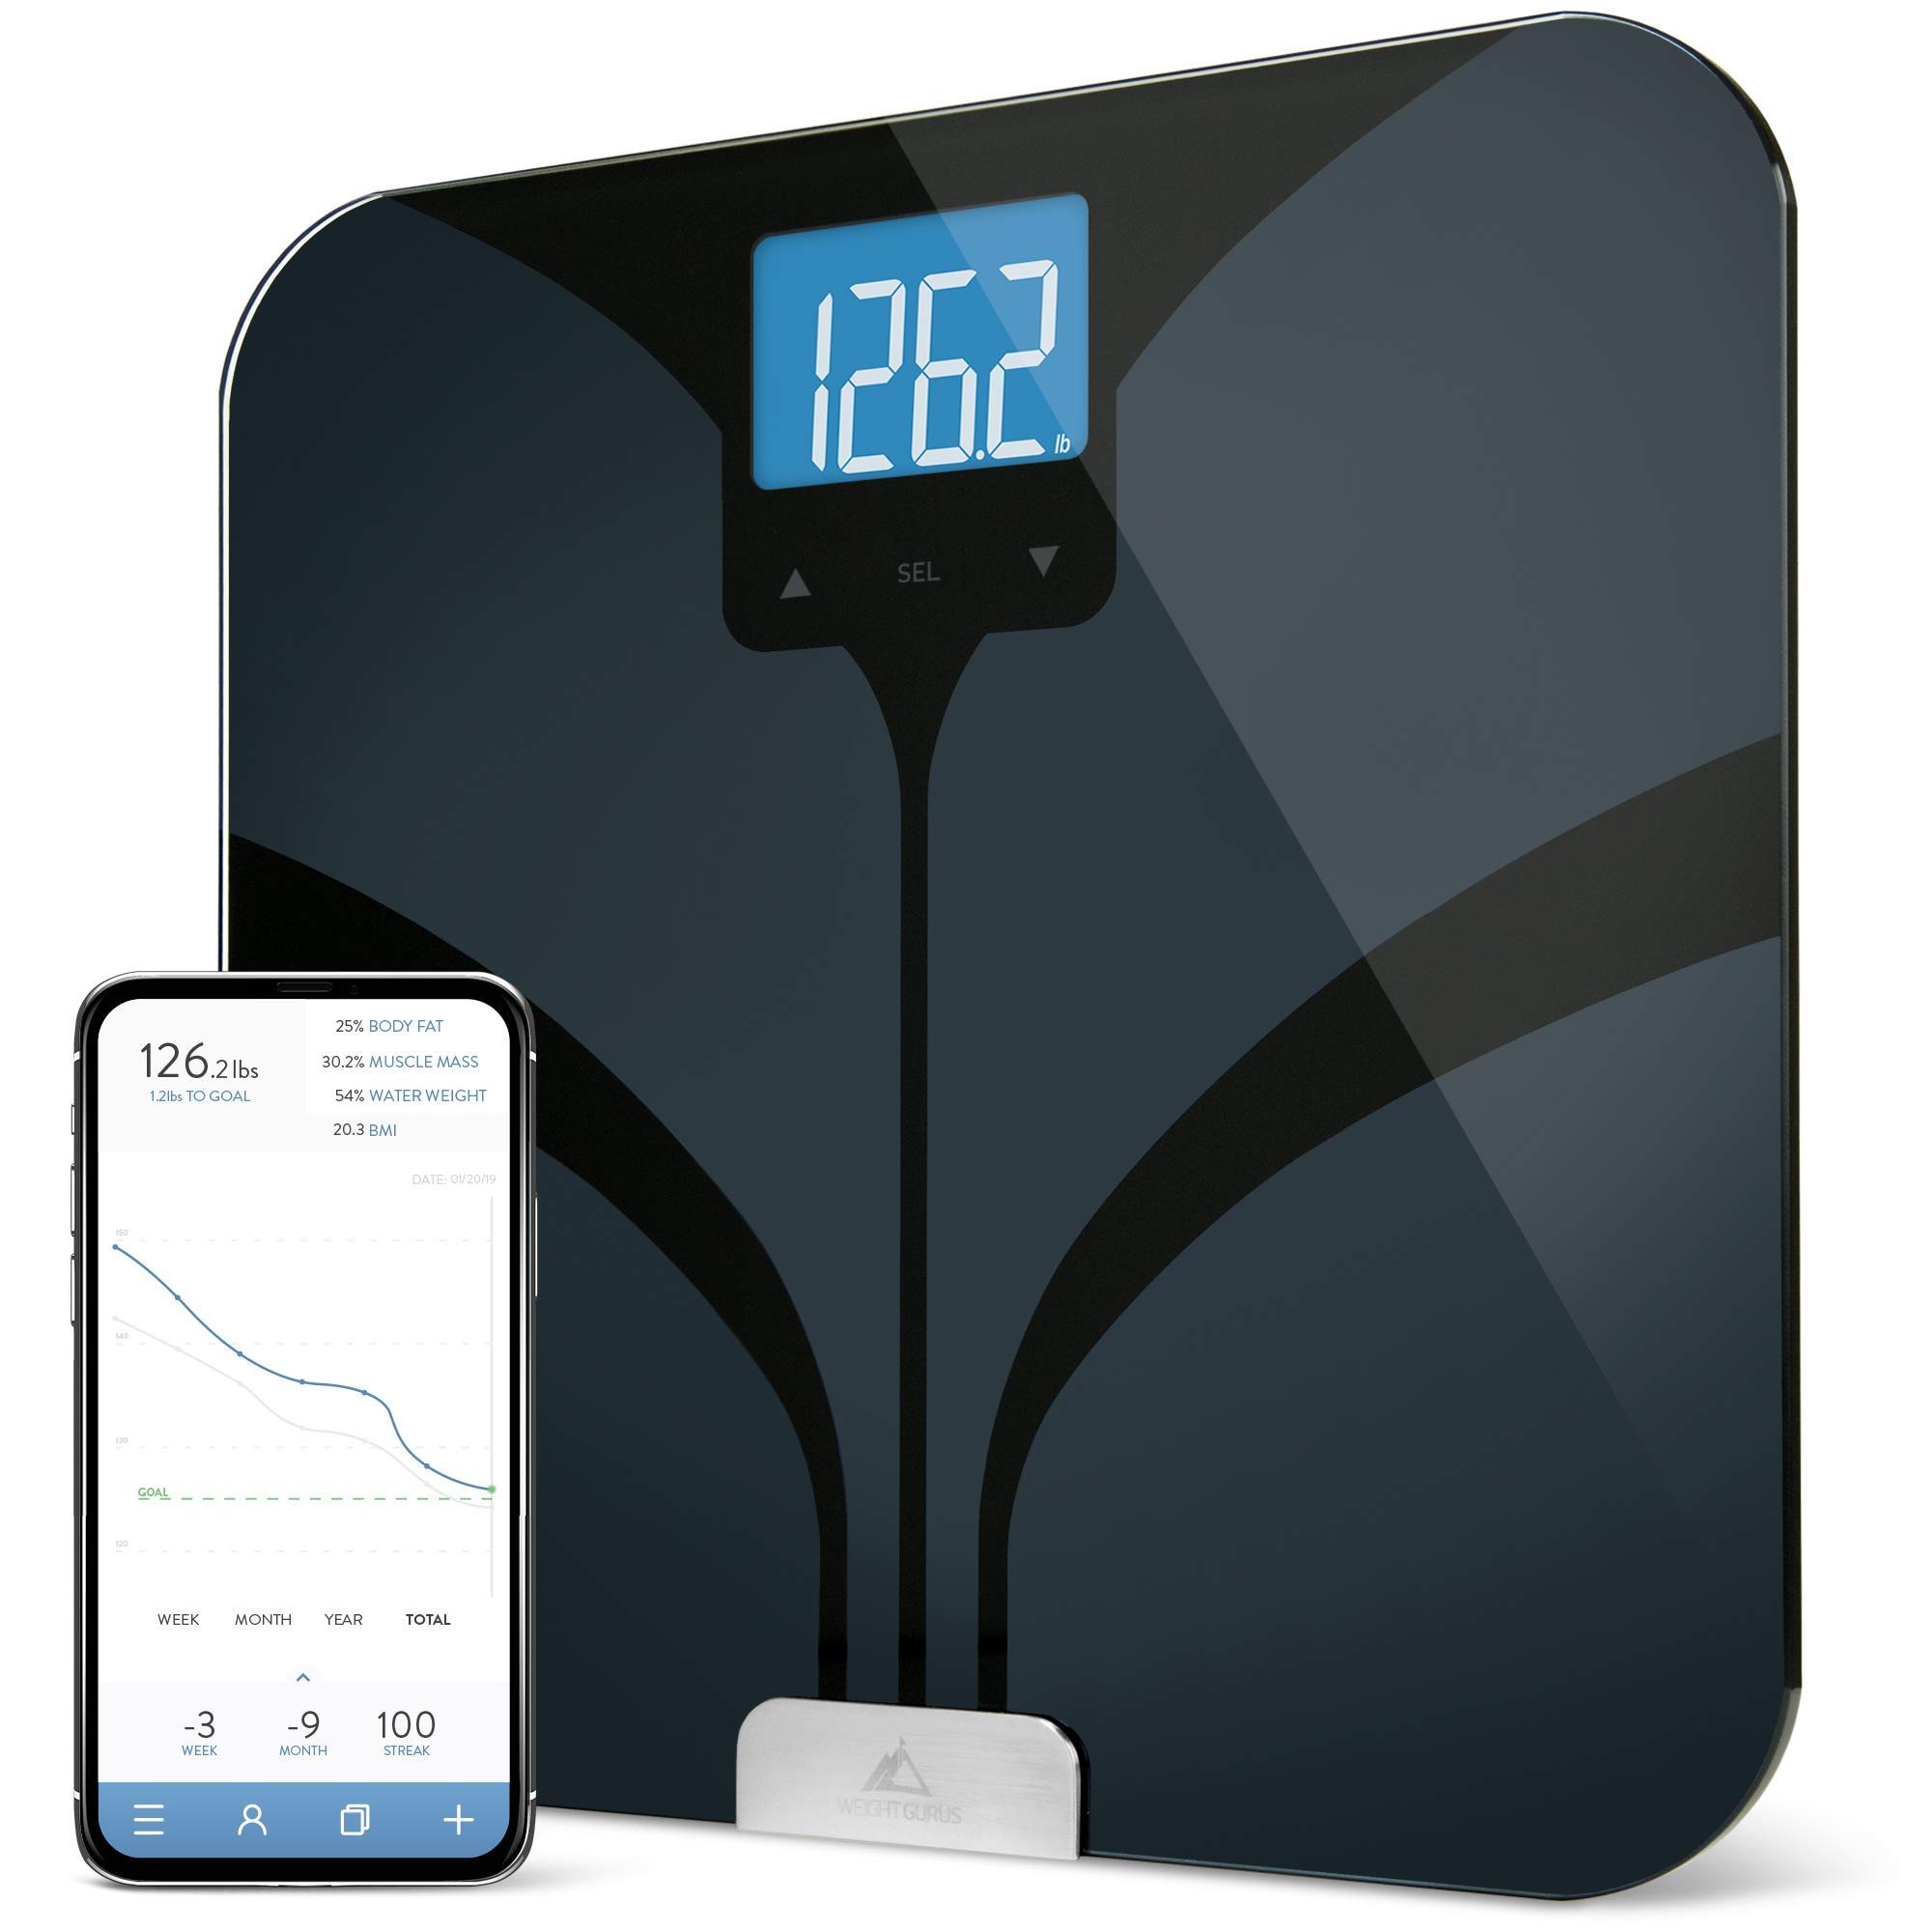 Bluetooth Digital Bathroom Scale Renpho Smart Body Fat Scale Model ES-CS20M